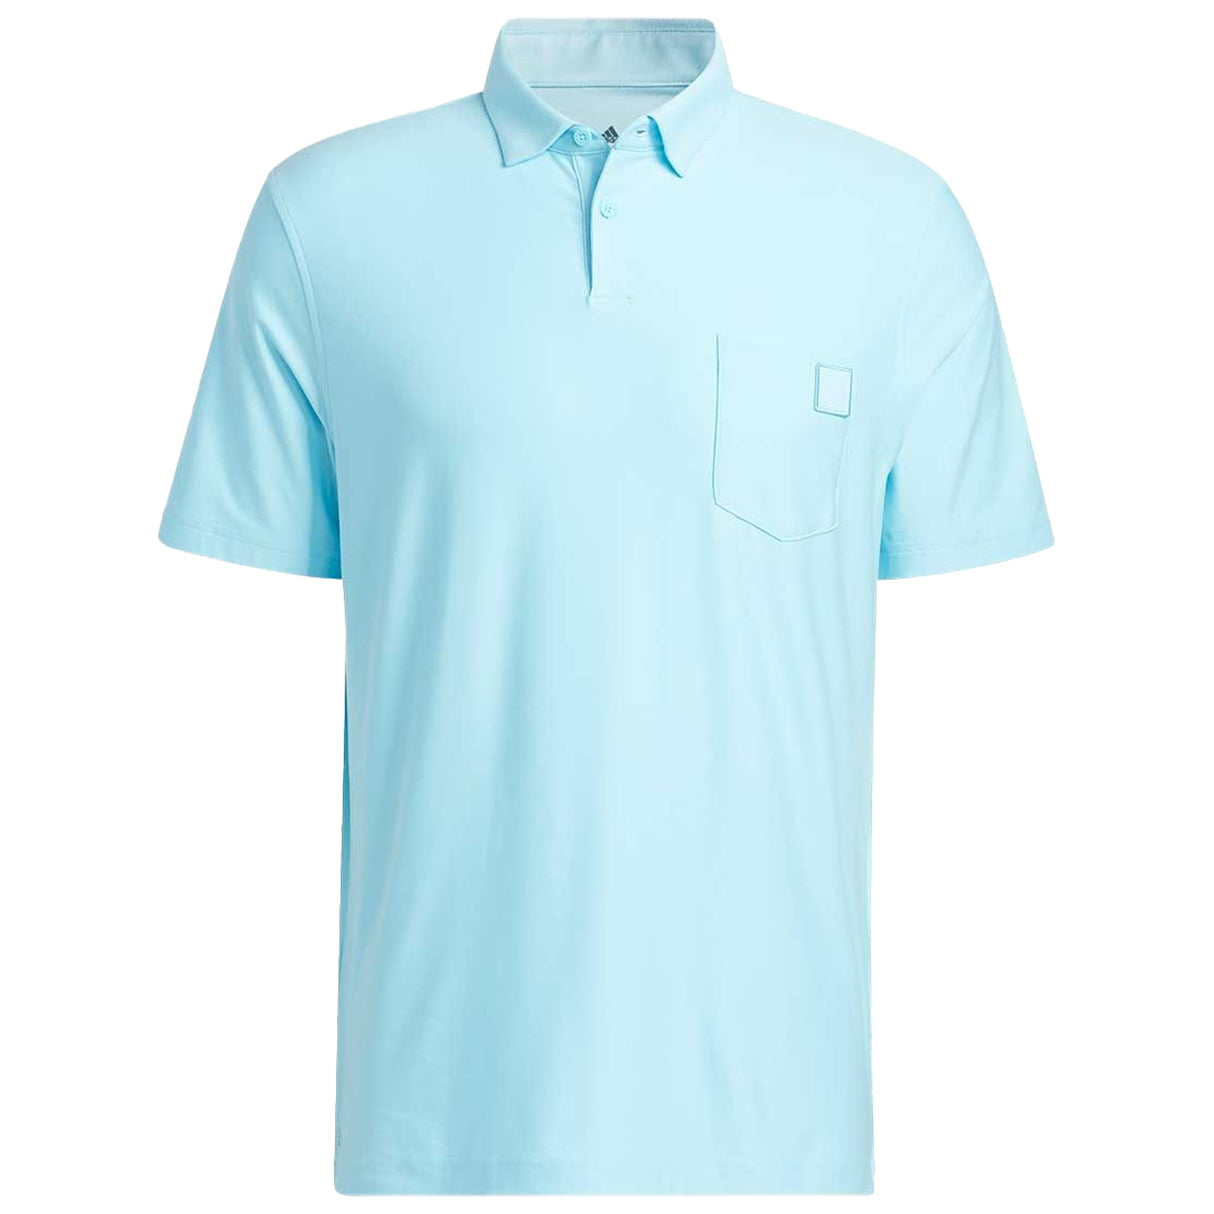 Adidas Golf Men's Go-to Chest Pocket Polo Shirt